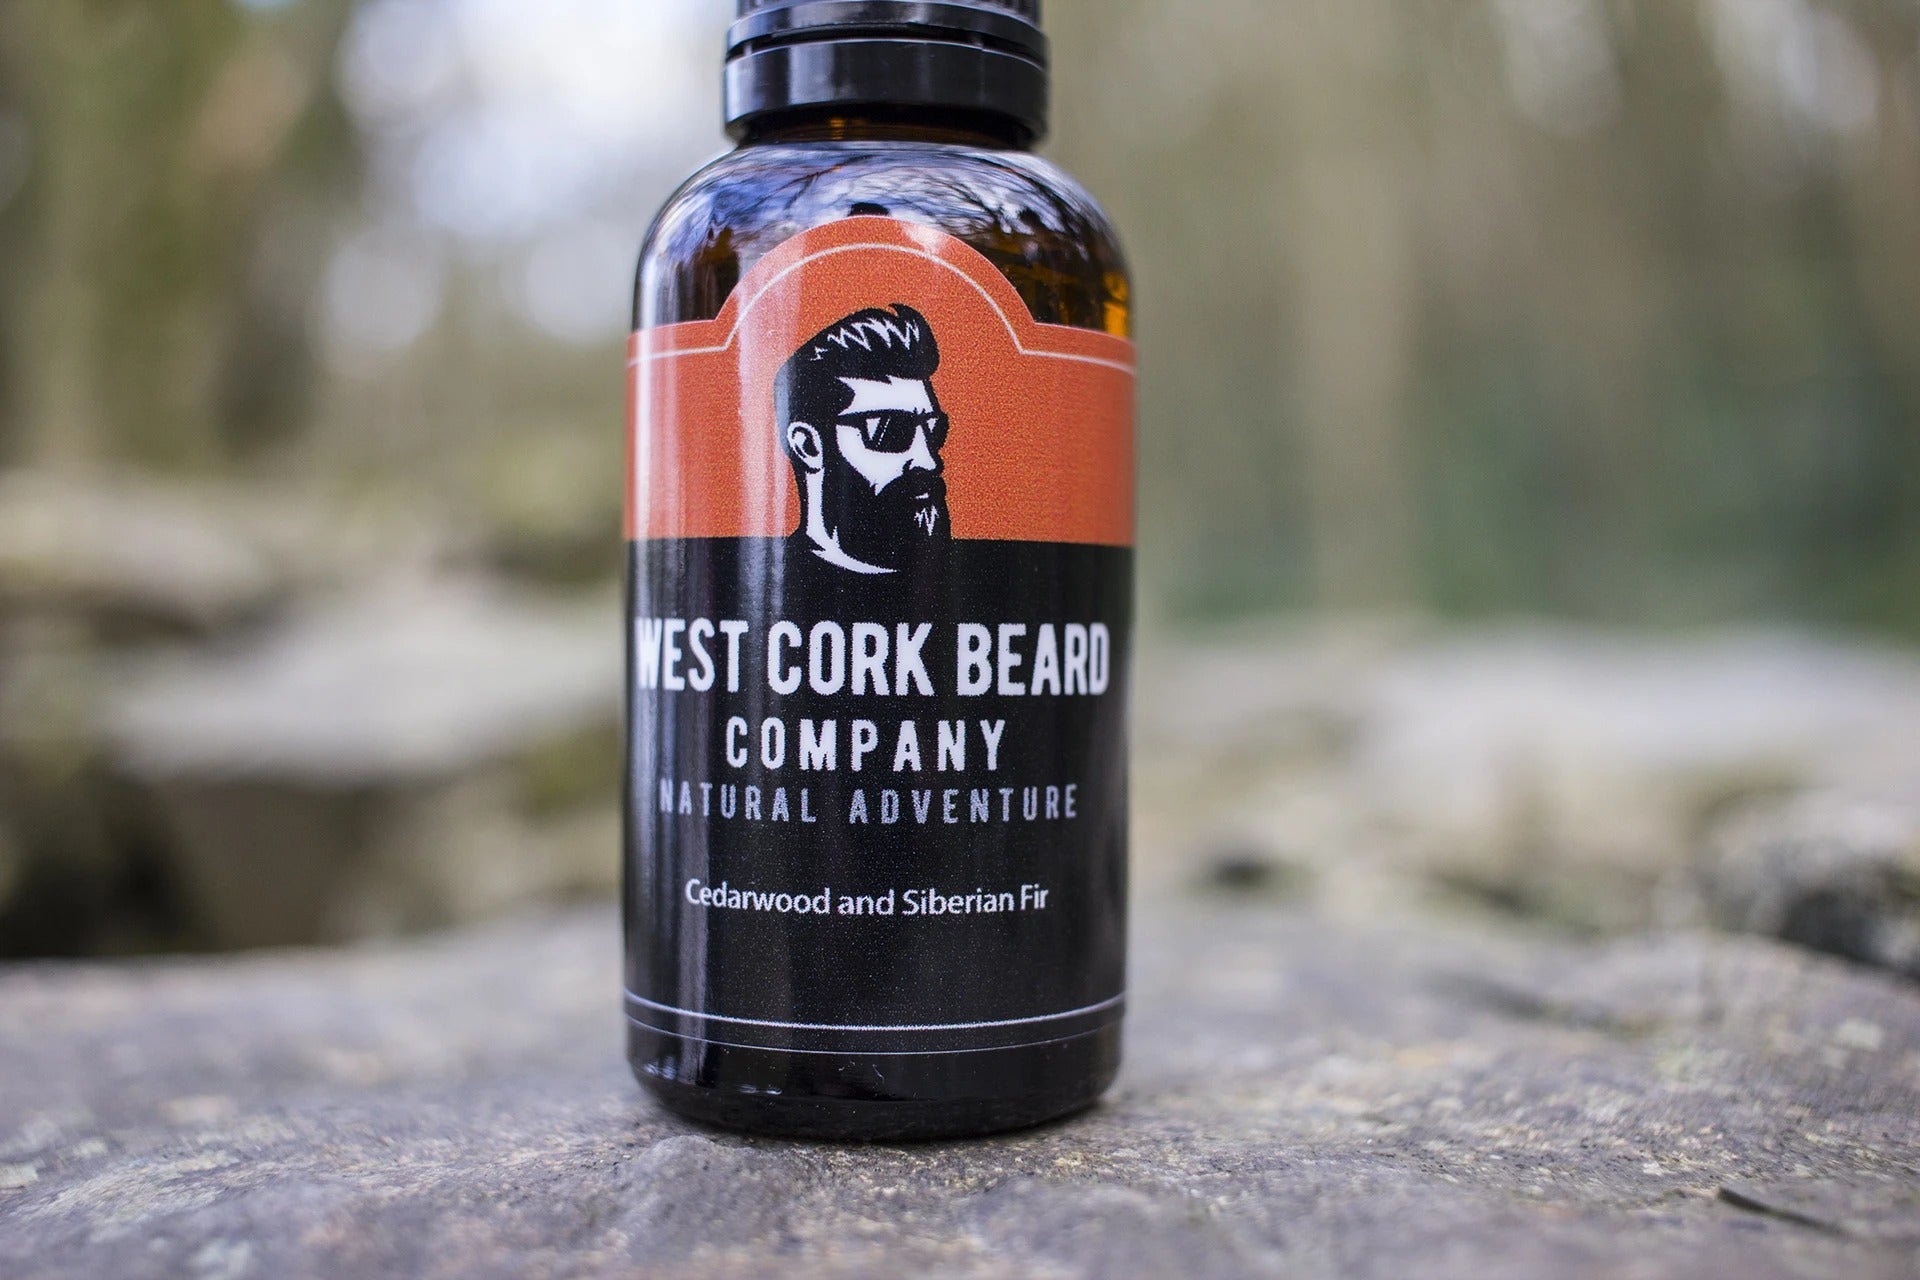 West Cork Beard Company - Beard Oil